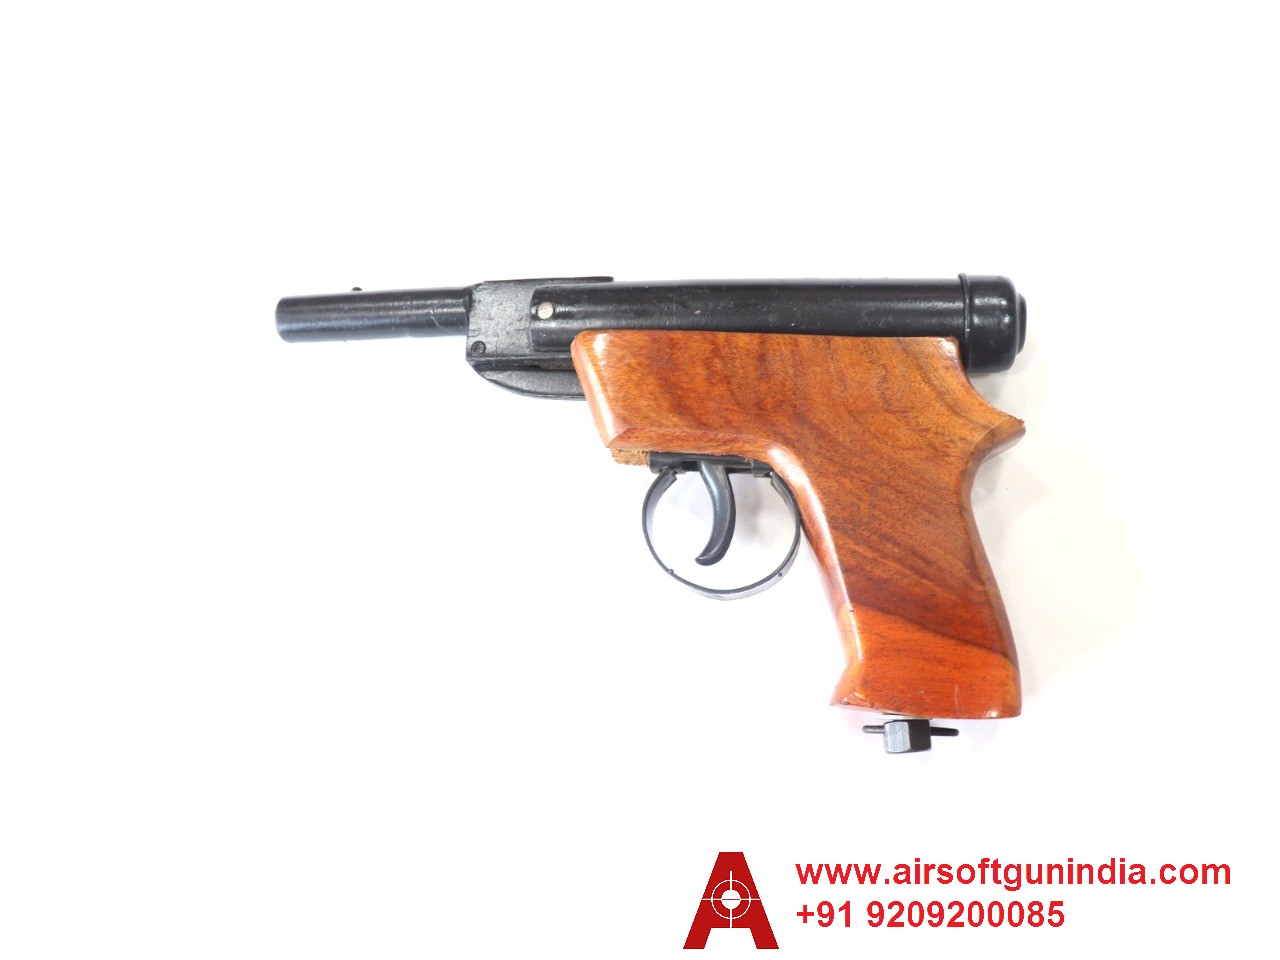 Baby Brown Butt Single-Shot .177 Caliber / 4.5 Mm Indian Air Pistol By Airsoft Gun India